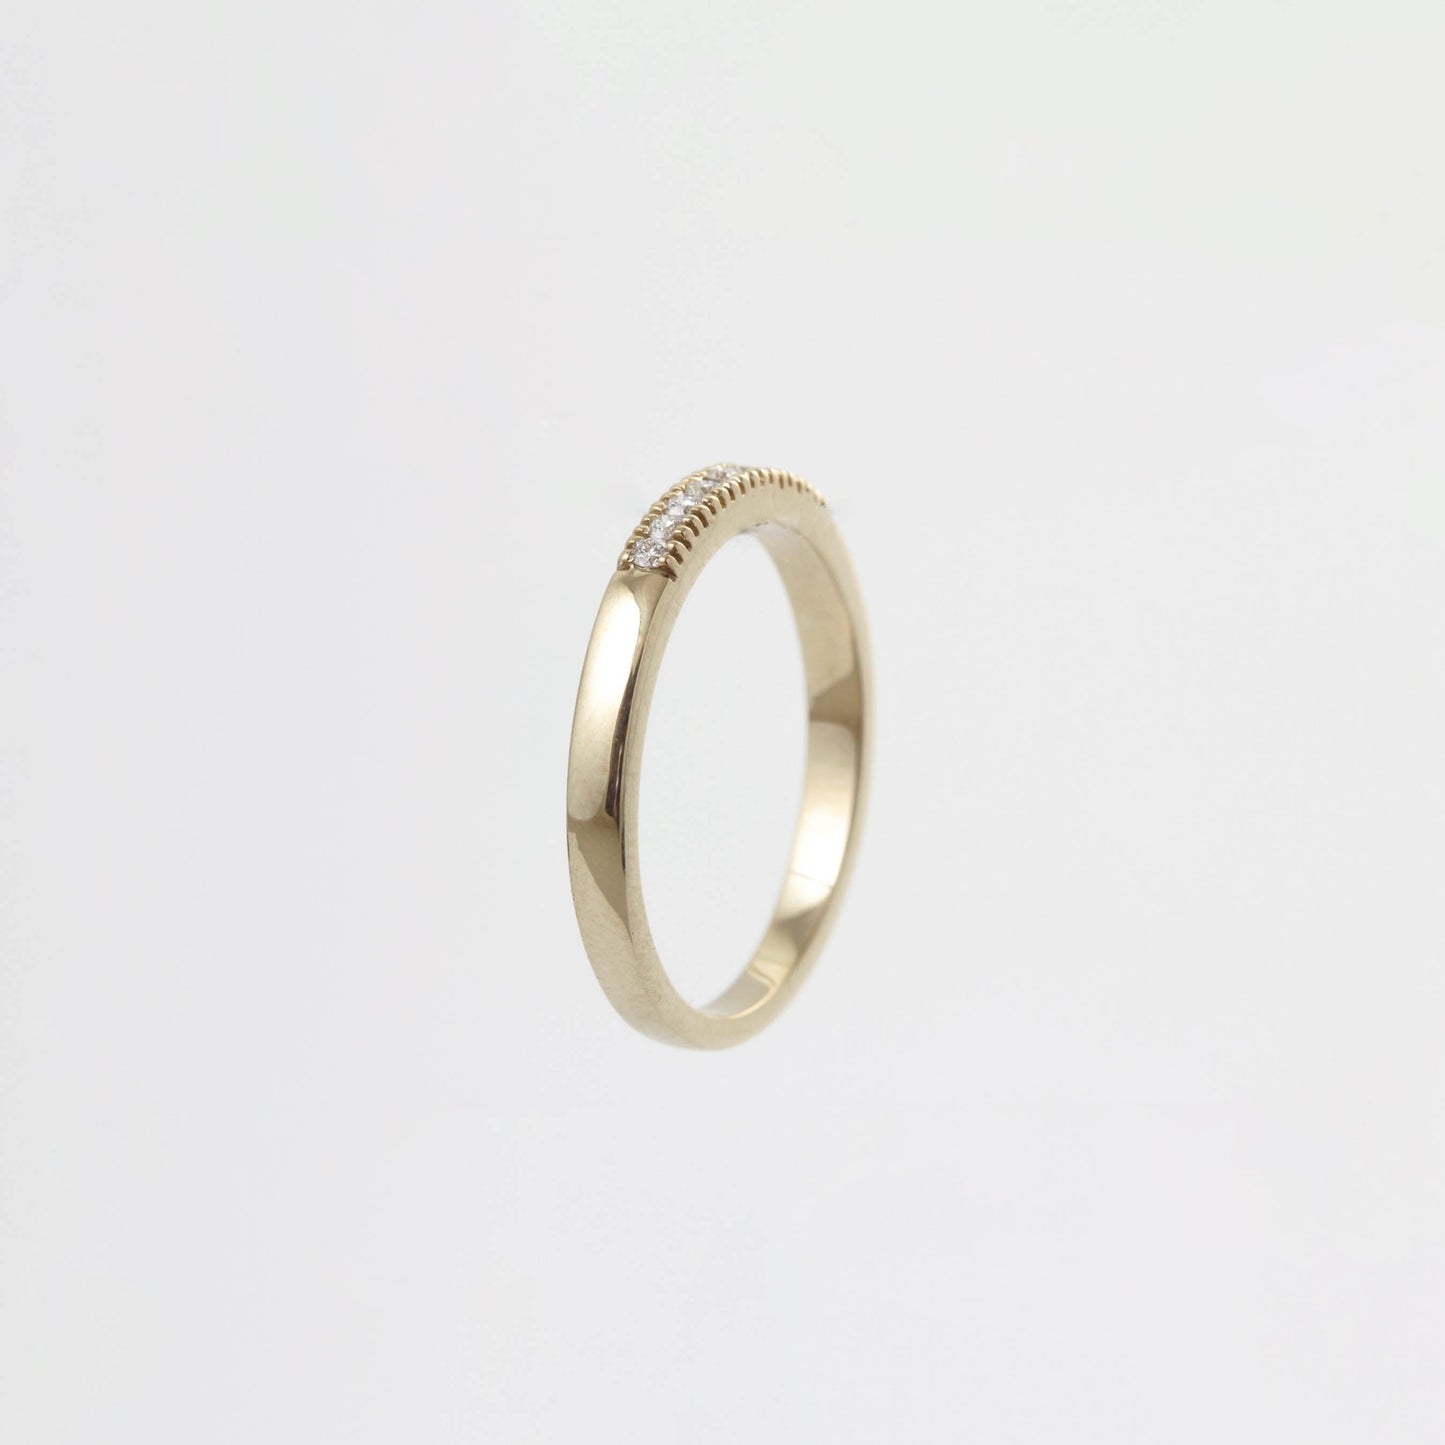 The Damayanti Gold and Diamond Ring by Rasvihar